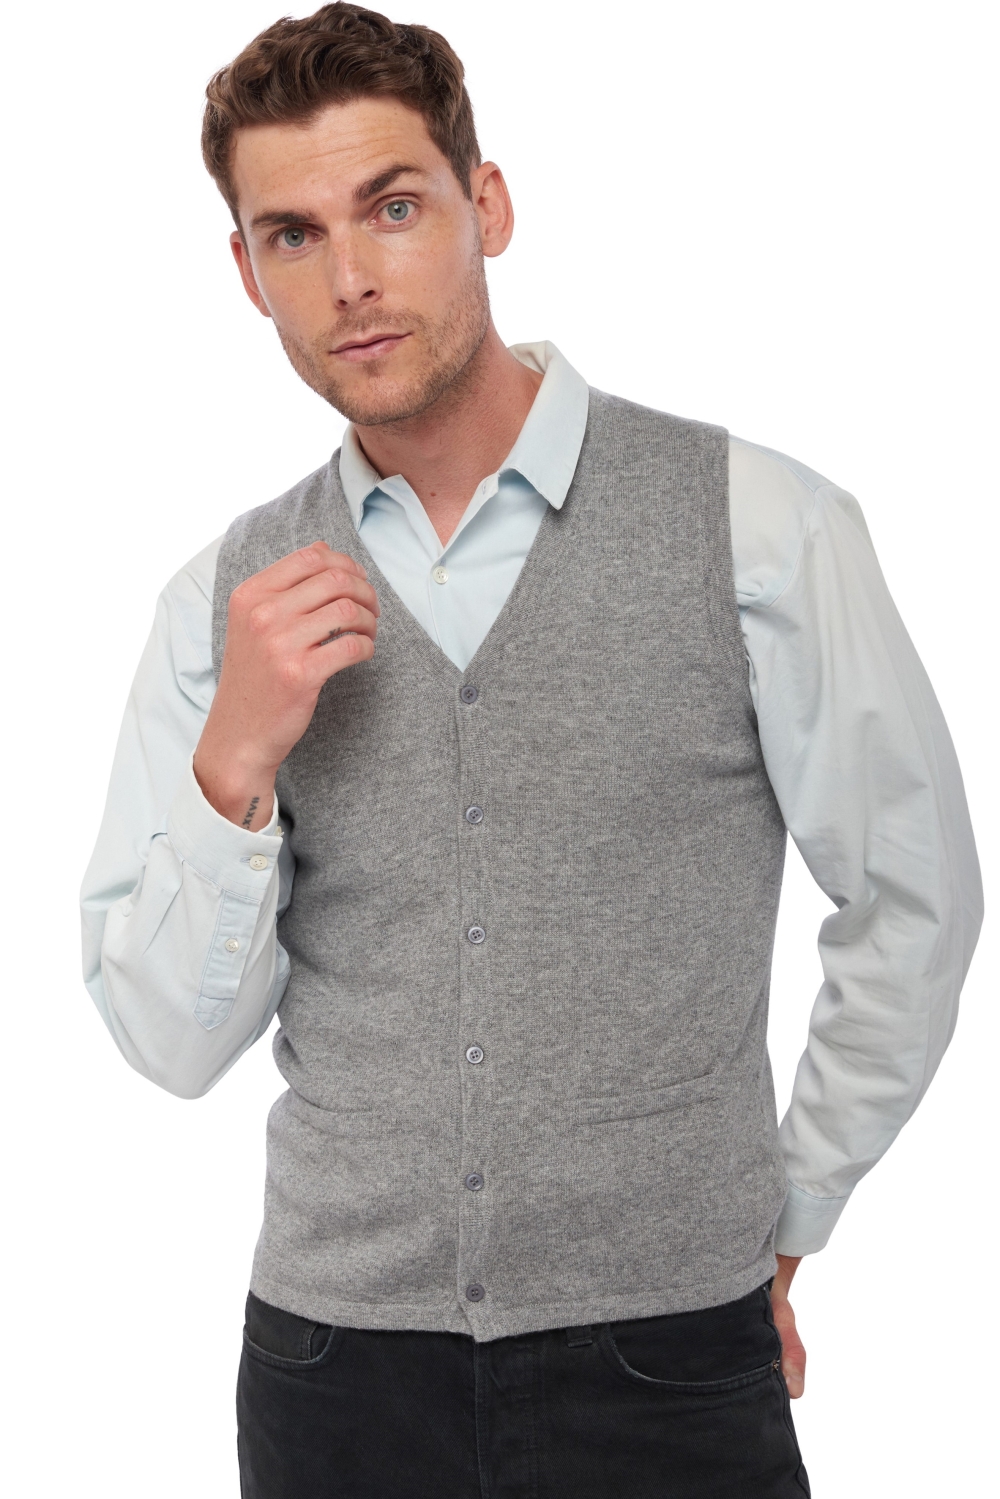 Cashmere men waistcoat sleeveless sweaters basile grey marl 2xl